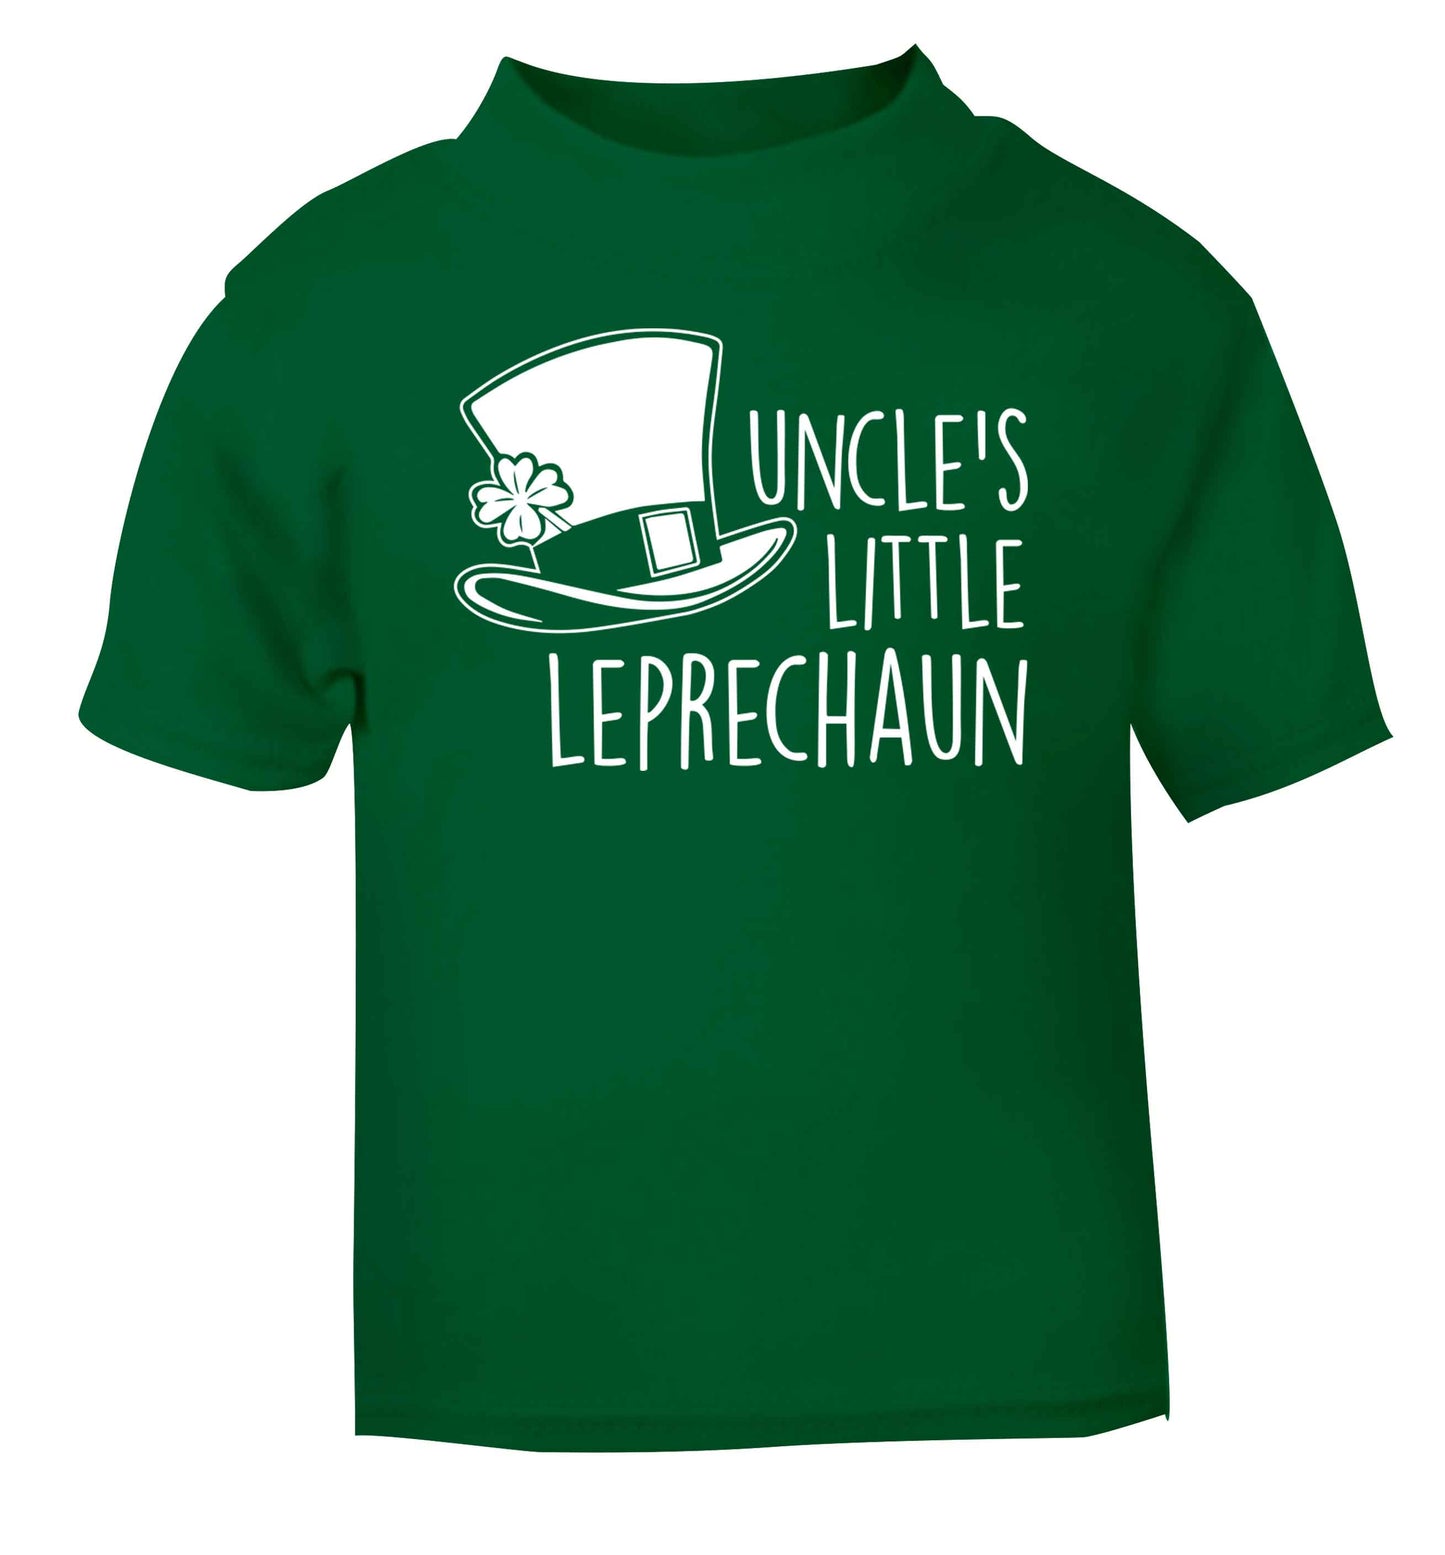 Uncles little leprechaun green baby toddler Tshirt 2 Years